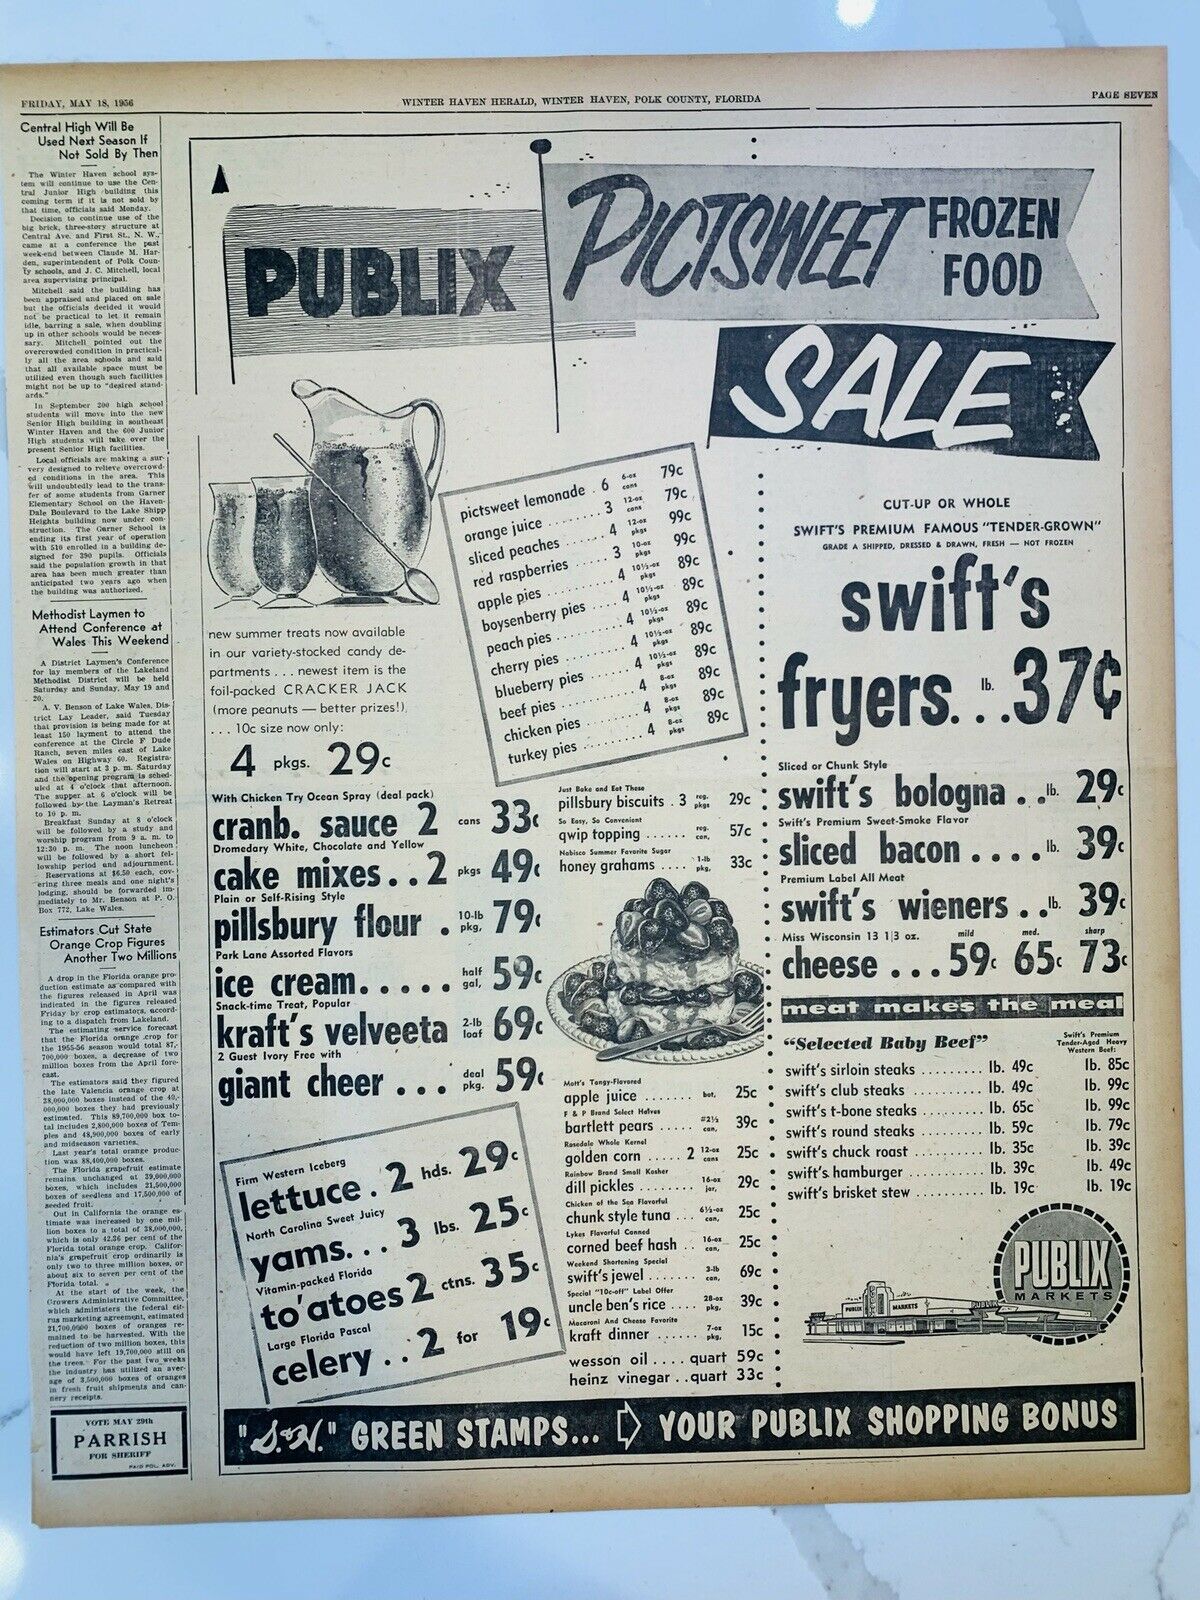 Publix 1956 Newspaper Ad Original - Pictsweet Frozen Food - May 18 1956